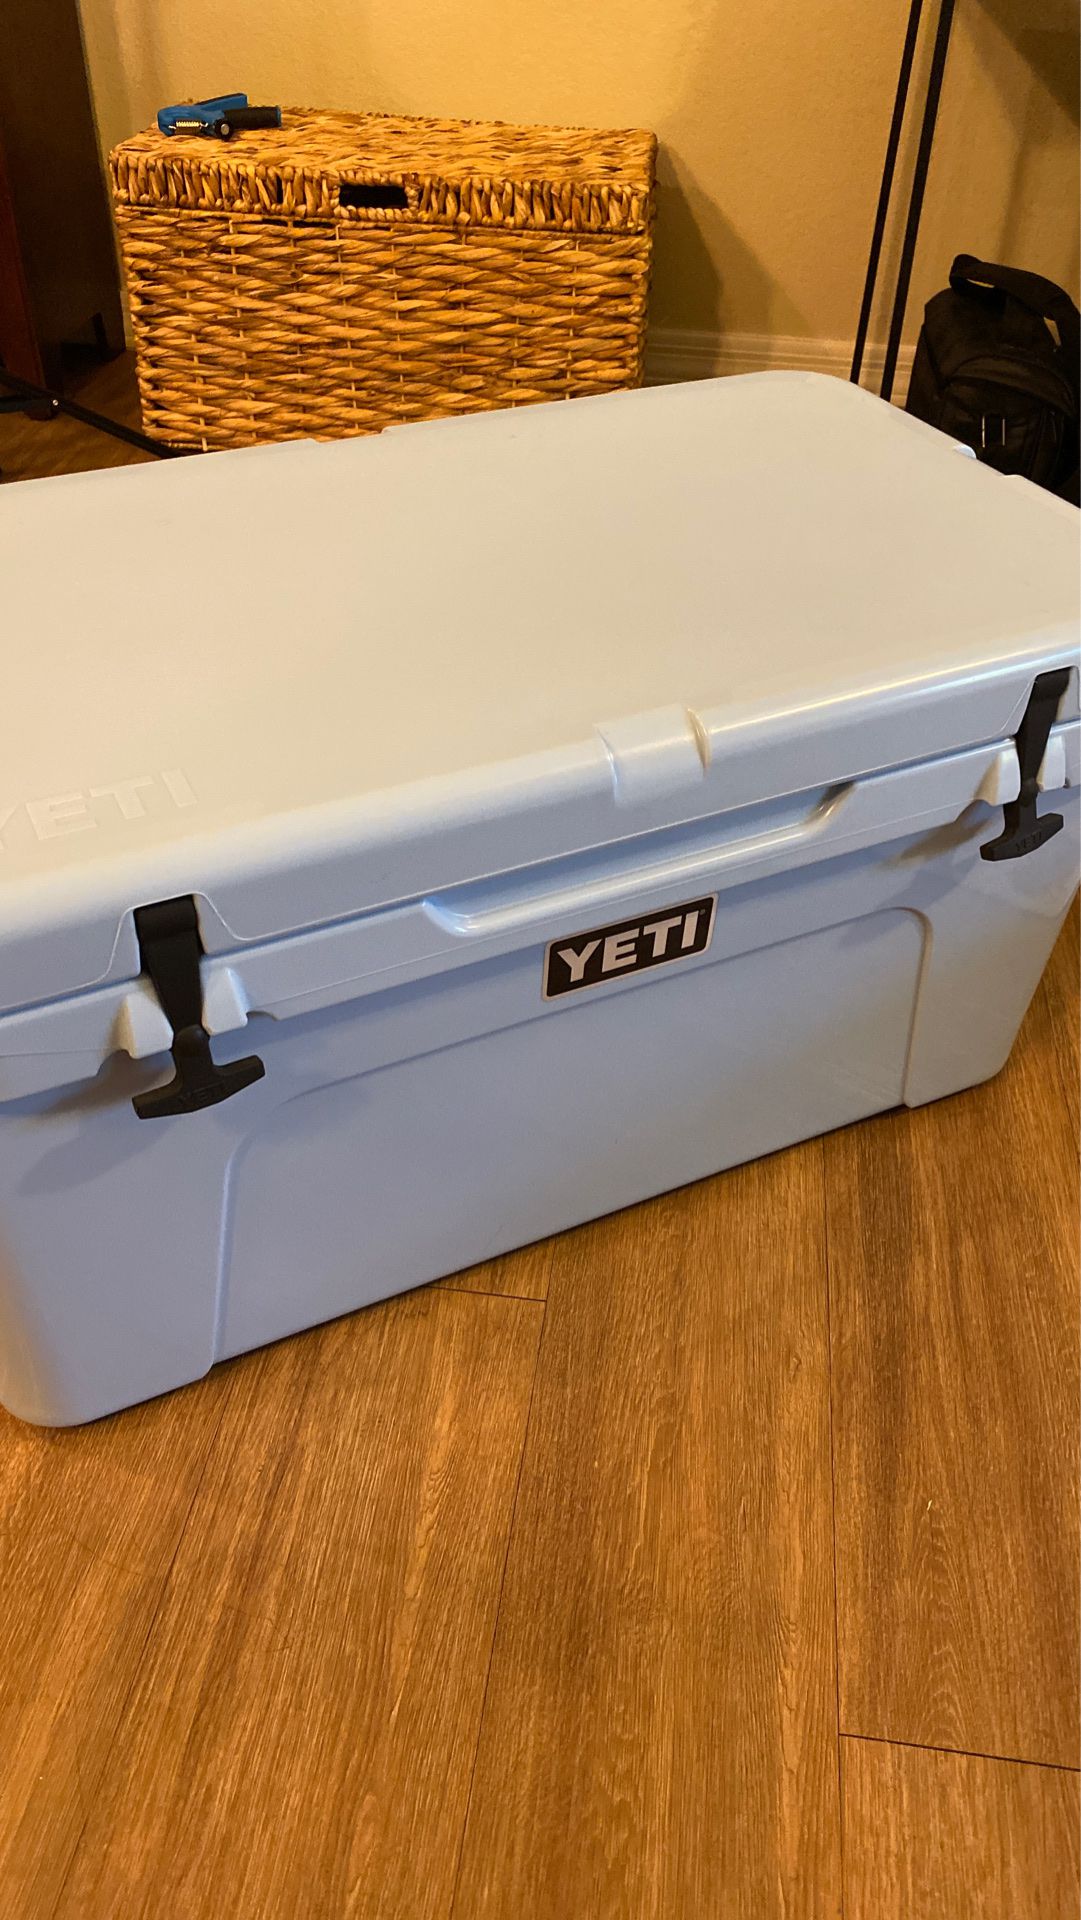 Yeti 65 Cooler - Brand New Never Used!